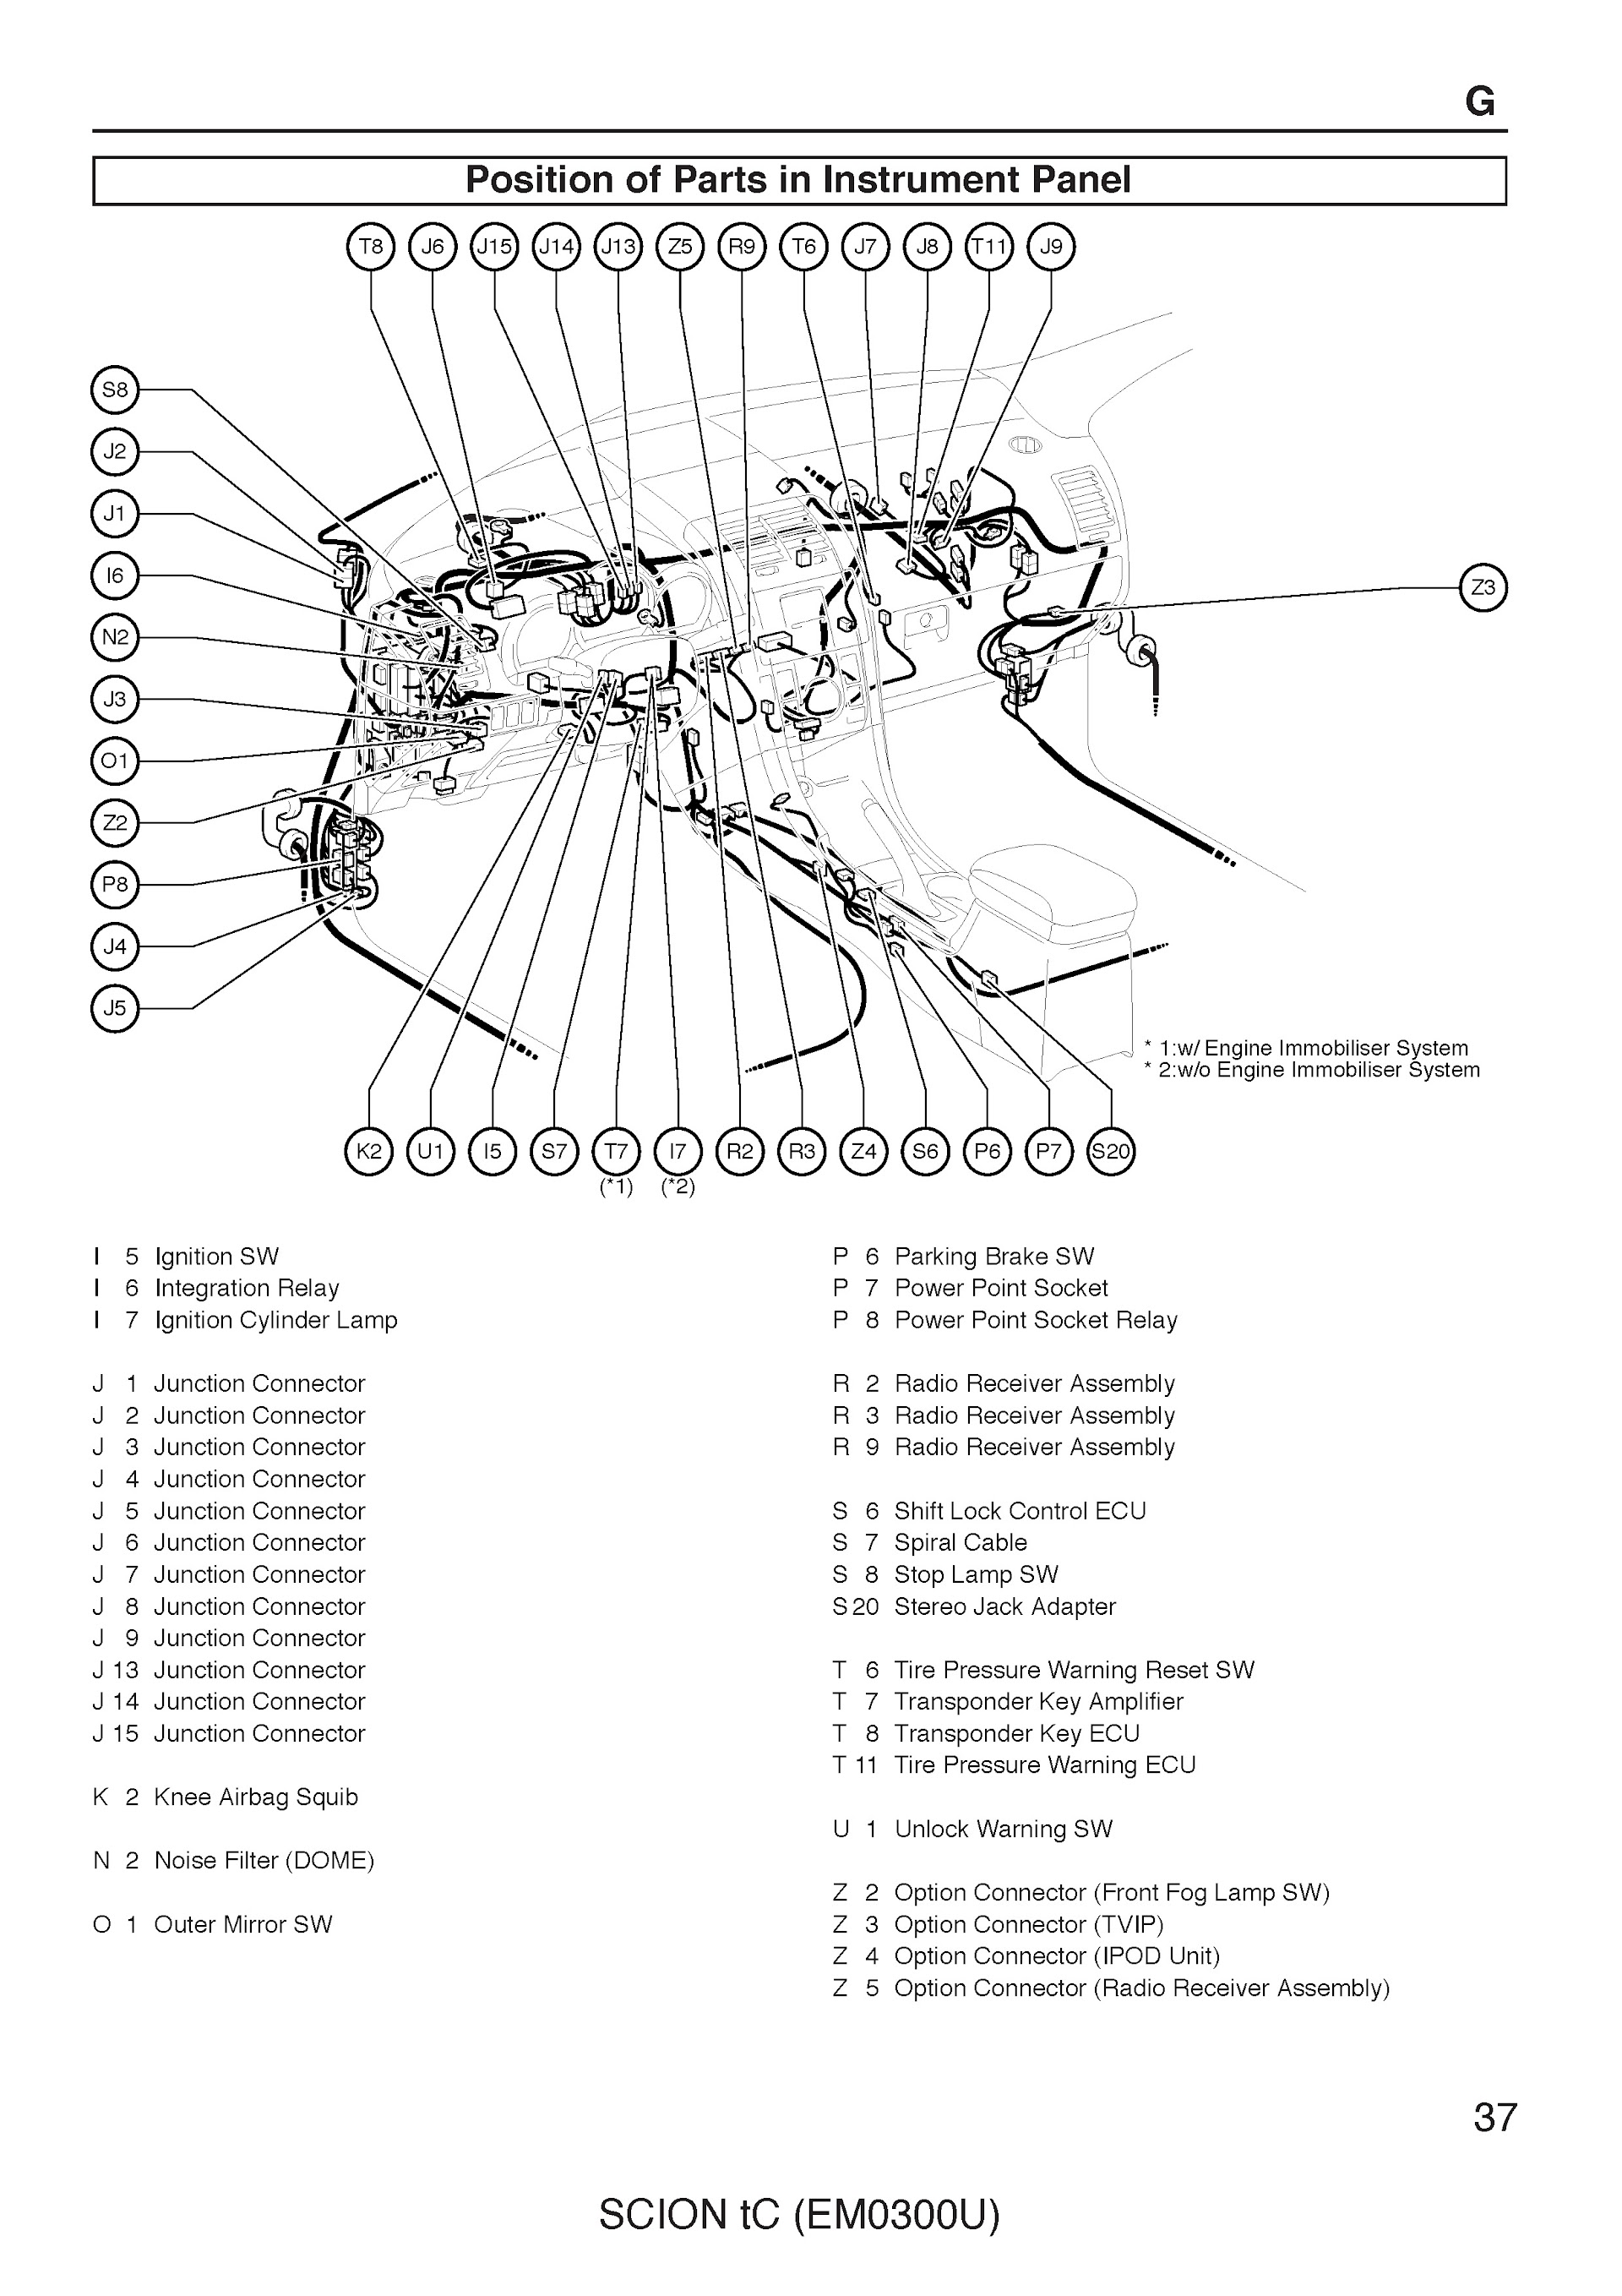 Download 2005-2010 Toyota Scion tC Repair Manual EM0300U Position of Parts in Instrument Panel